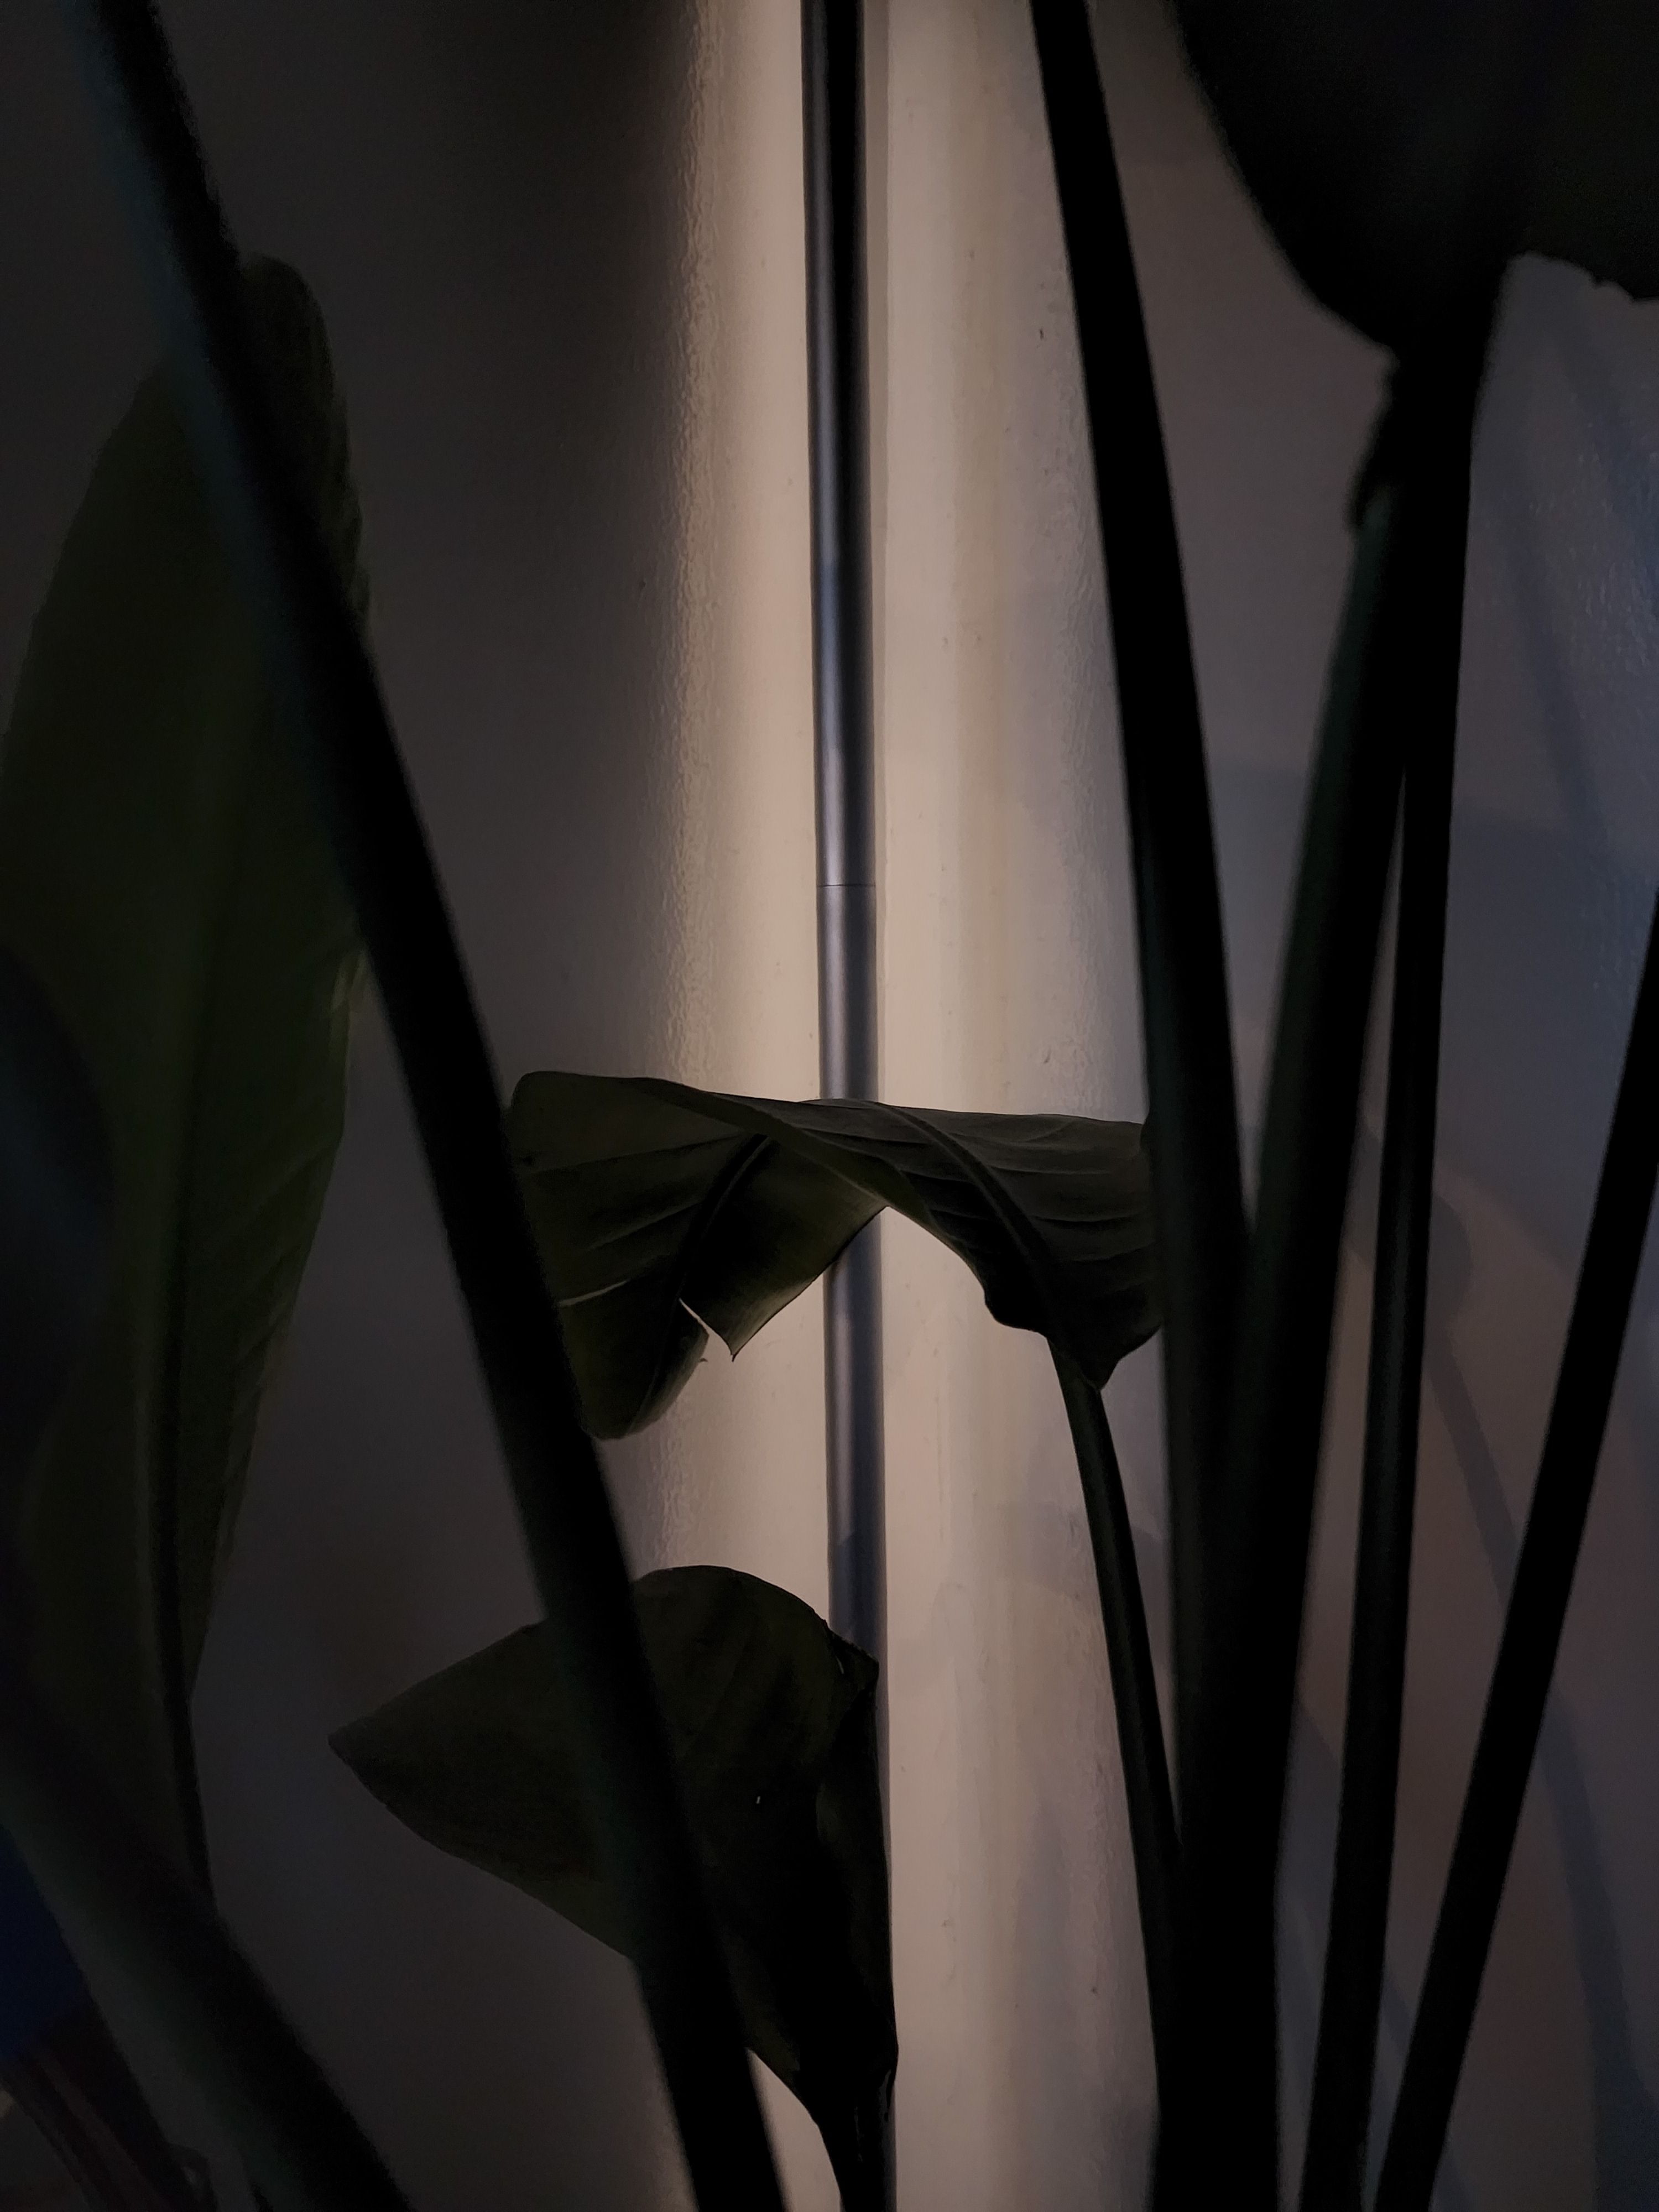 A dark scene of a houseplant shot with pixel binning.